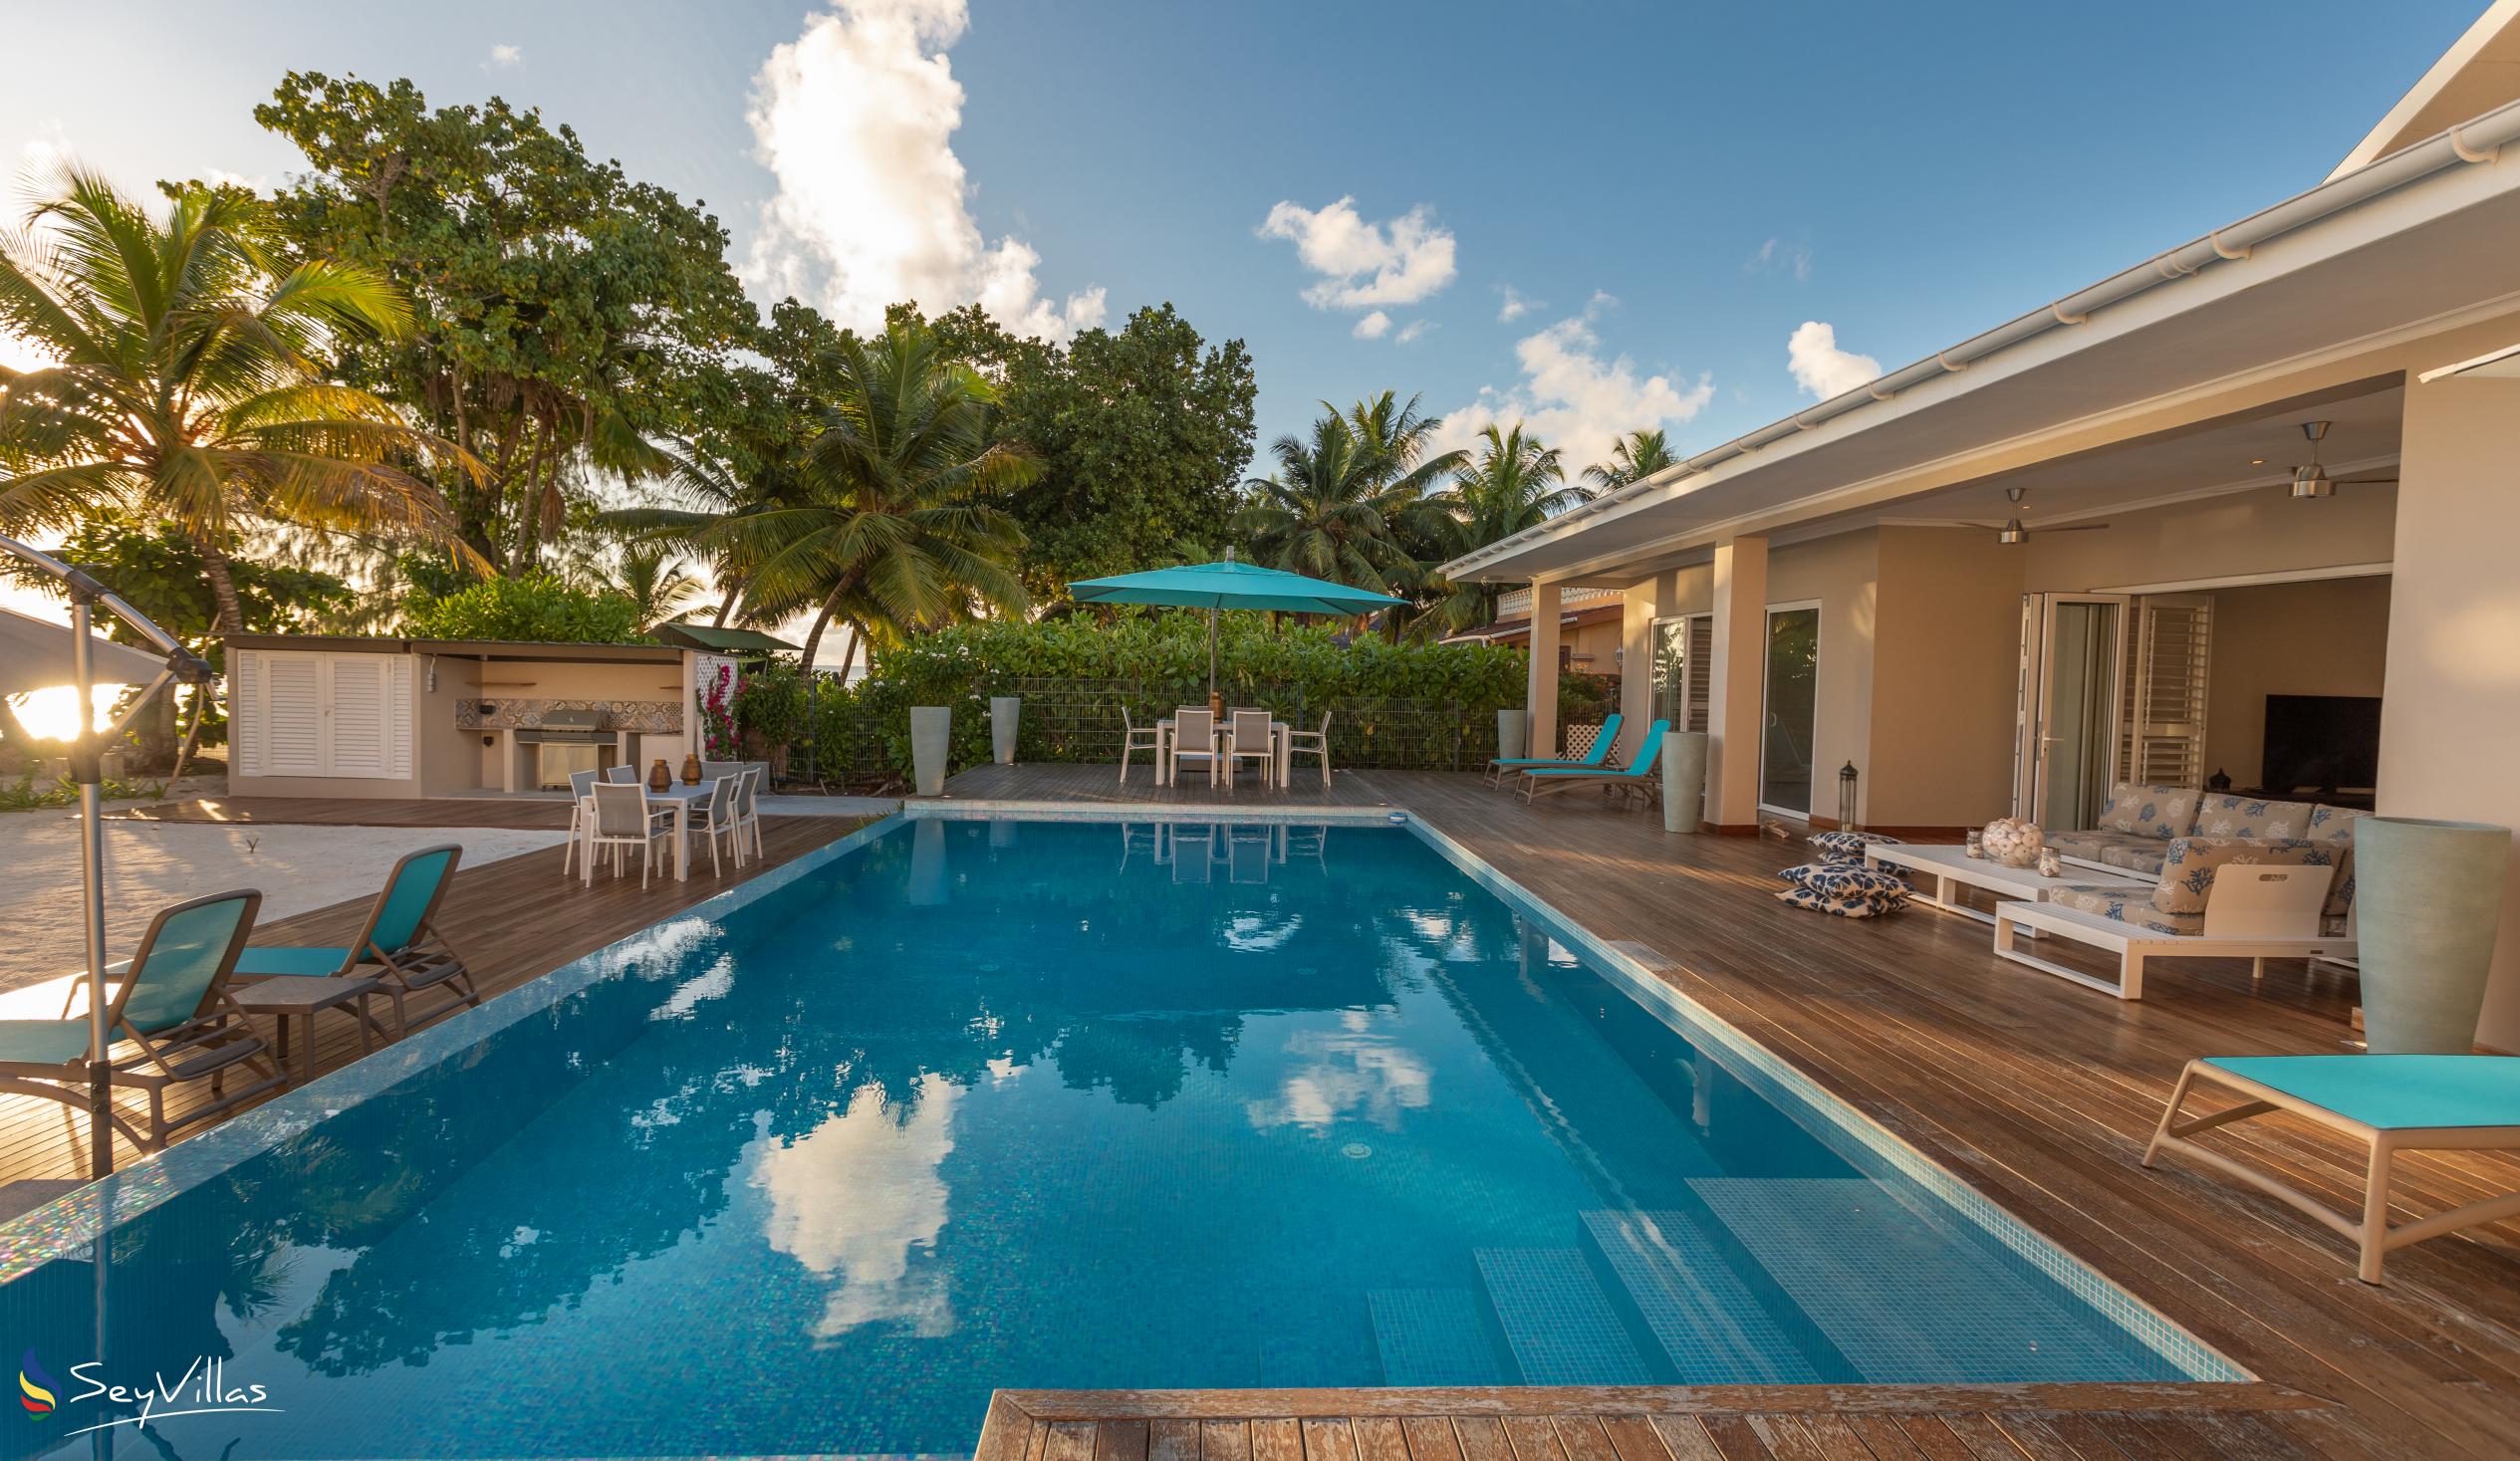 Foto 50: Villas Coco Beach - La Maison Villas Coco Beach - Praslin (Seychelles)